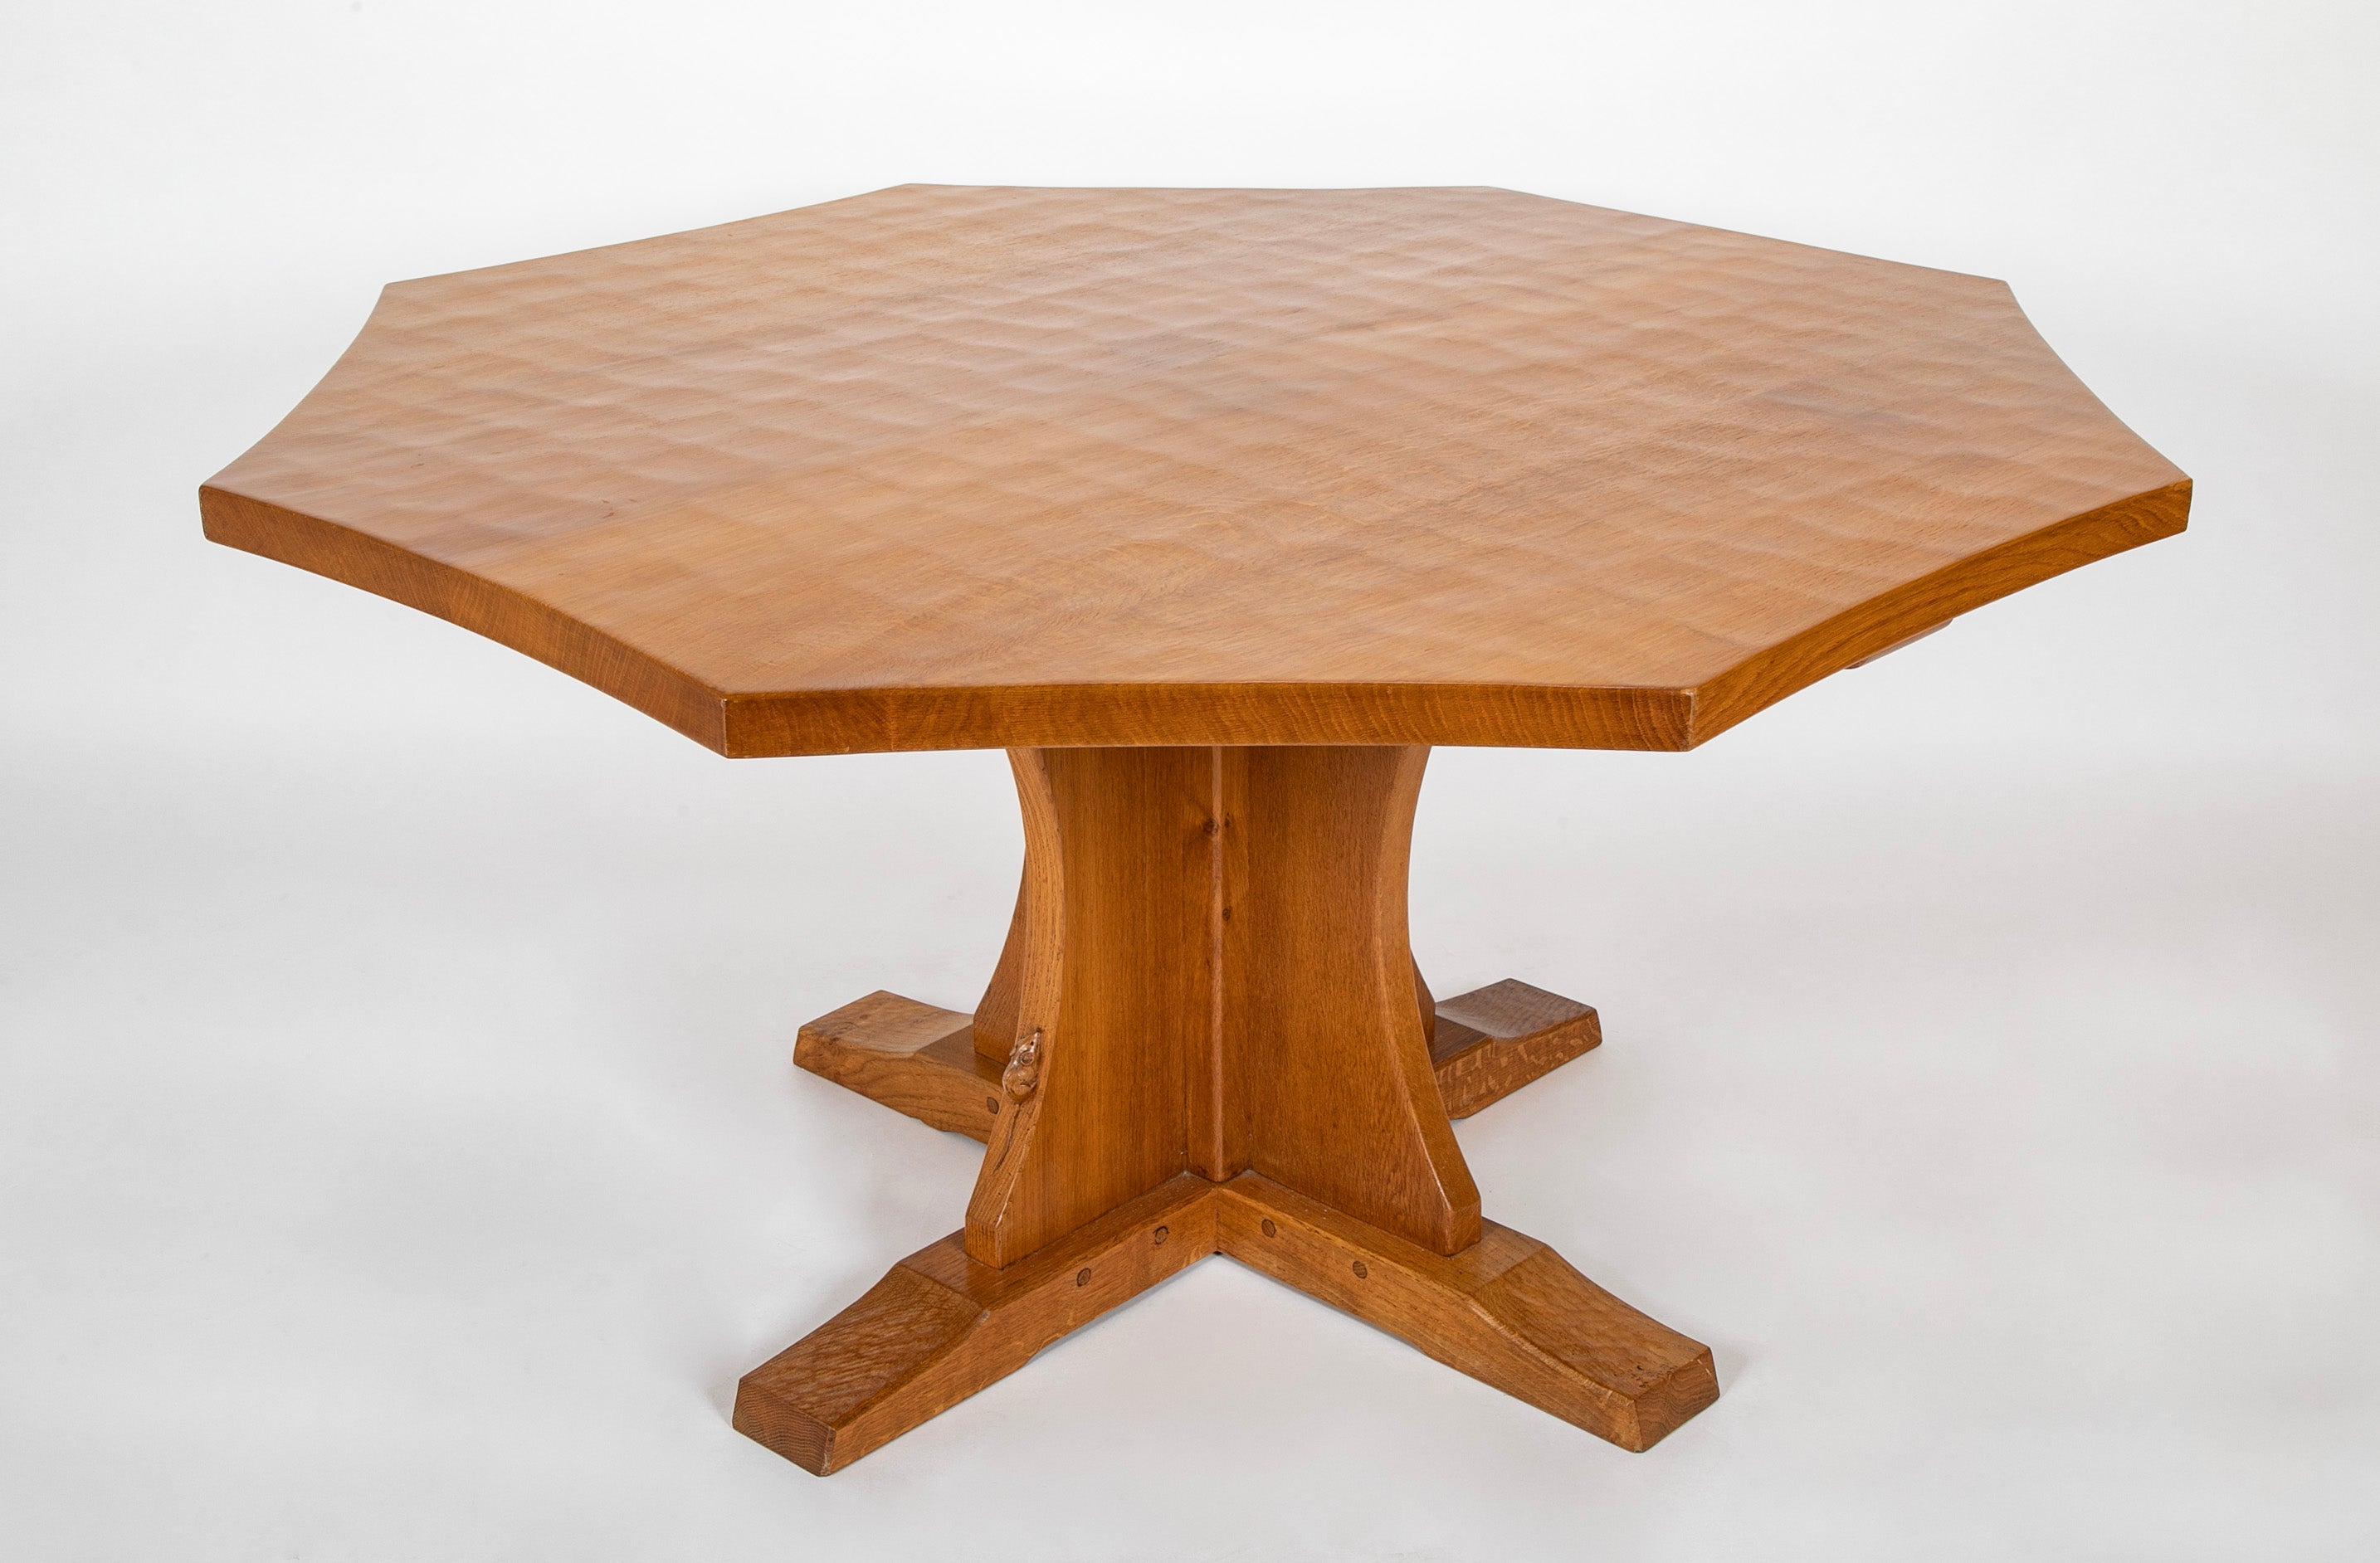 Octagonal Arts & Crafts Oak Center Table by Robert "Mouseman" Thompson